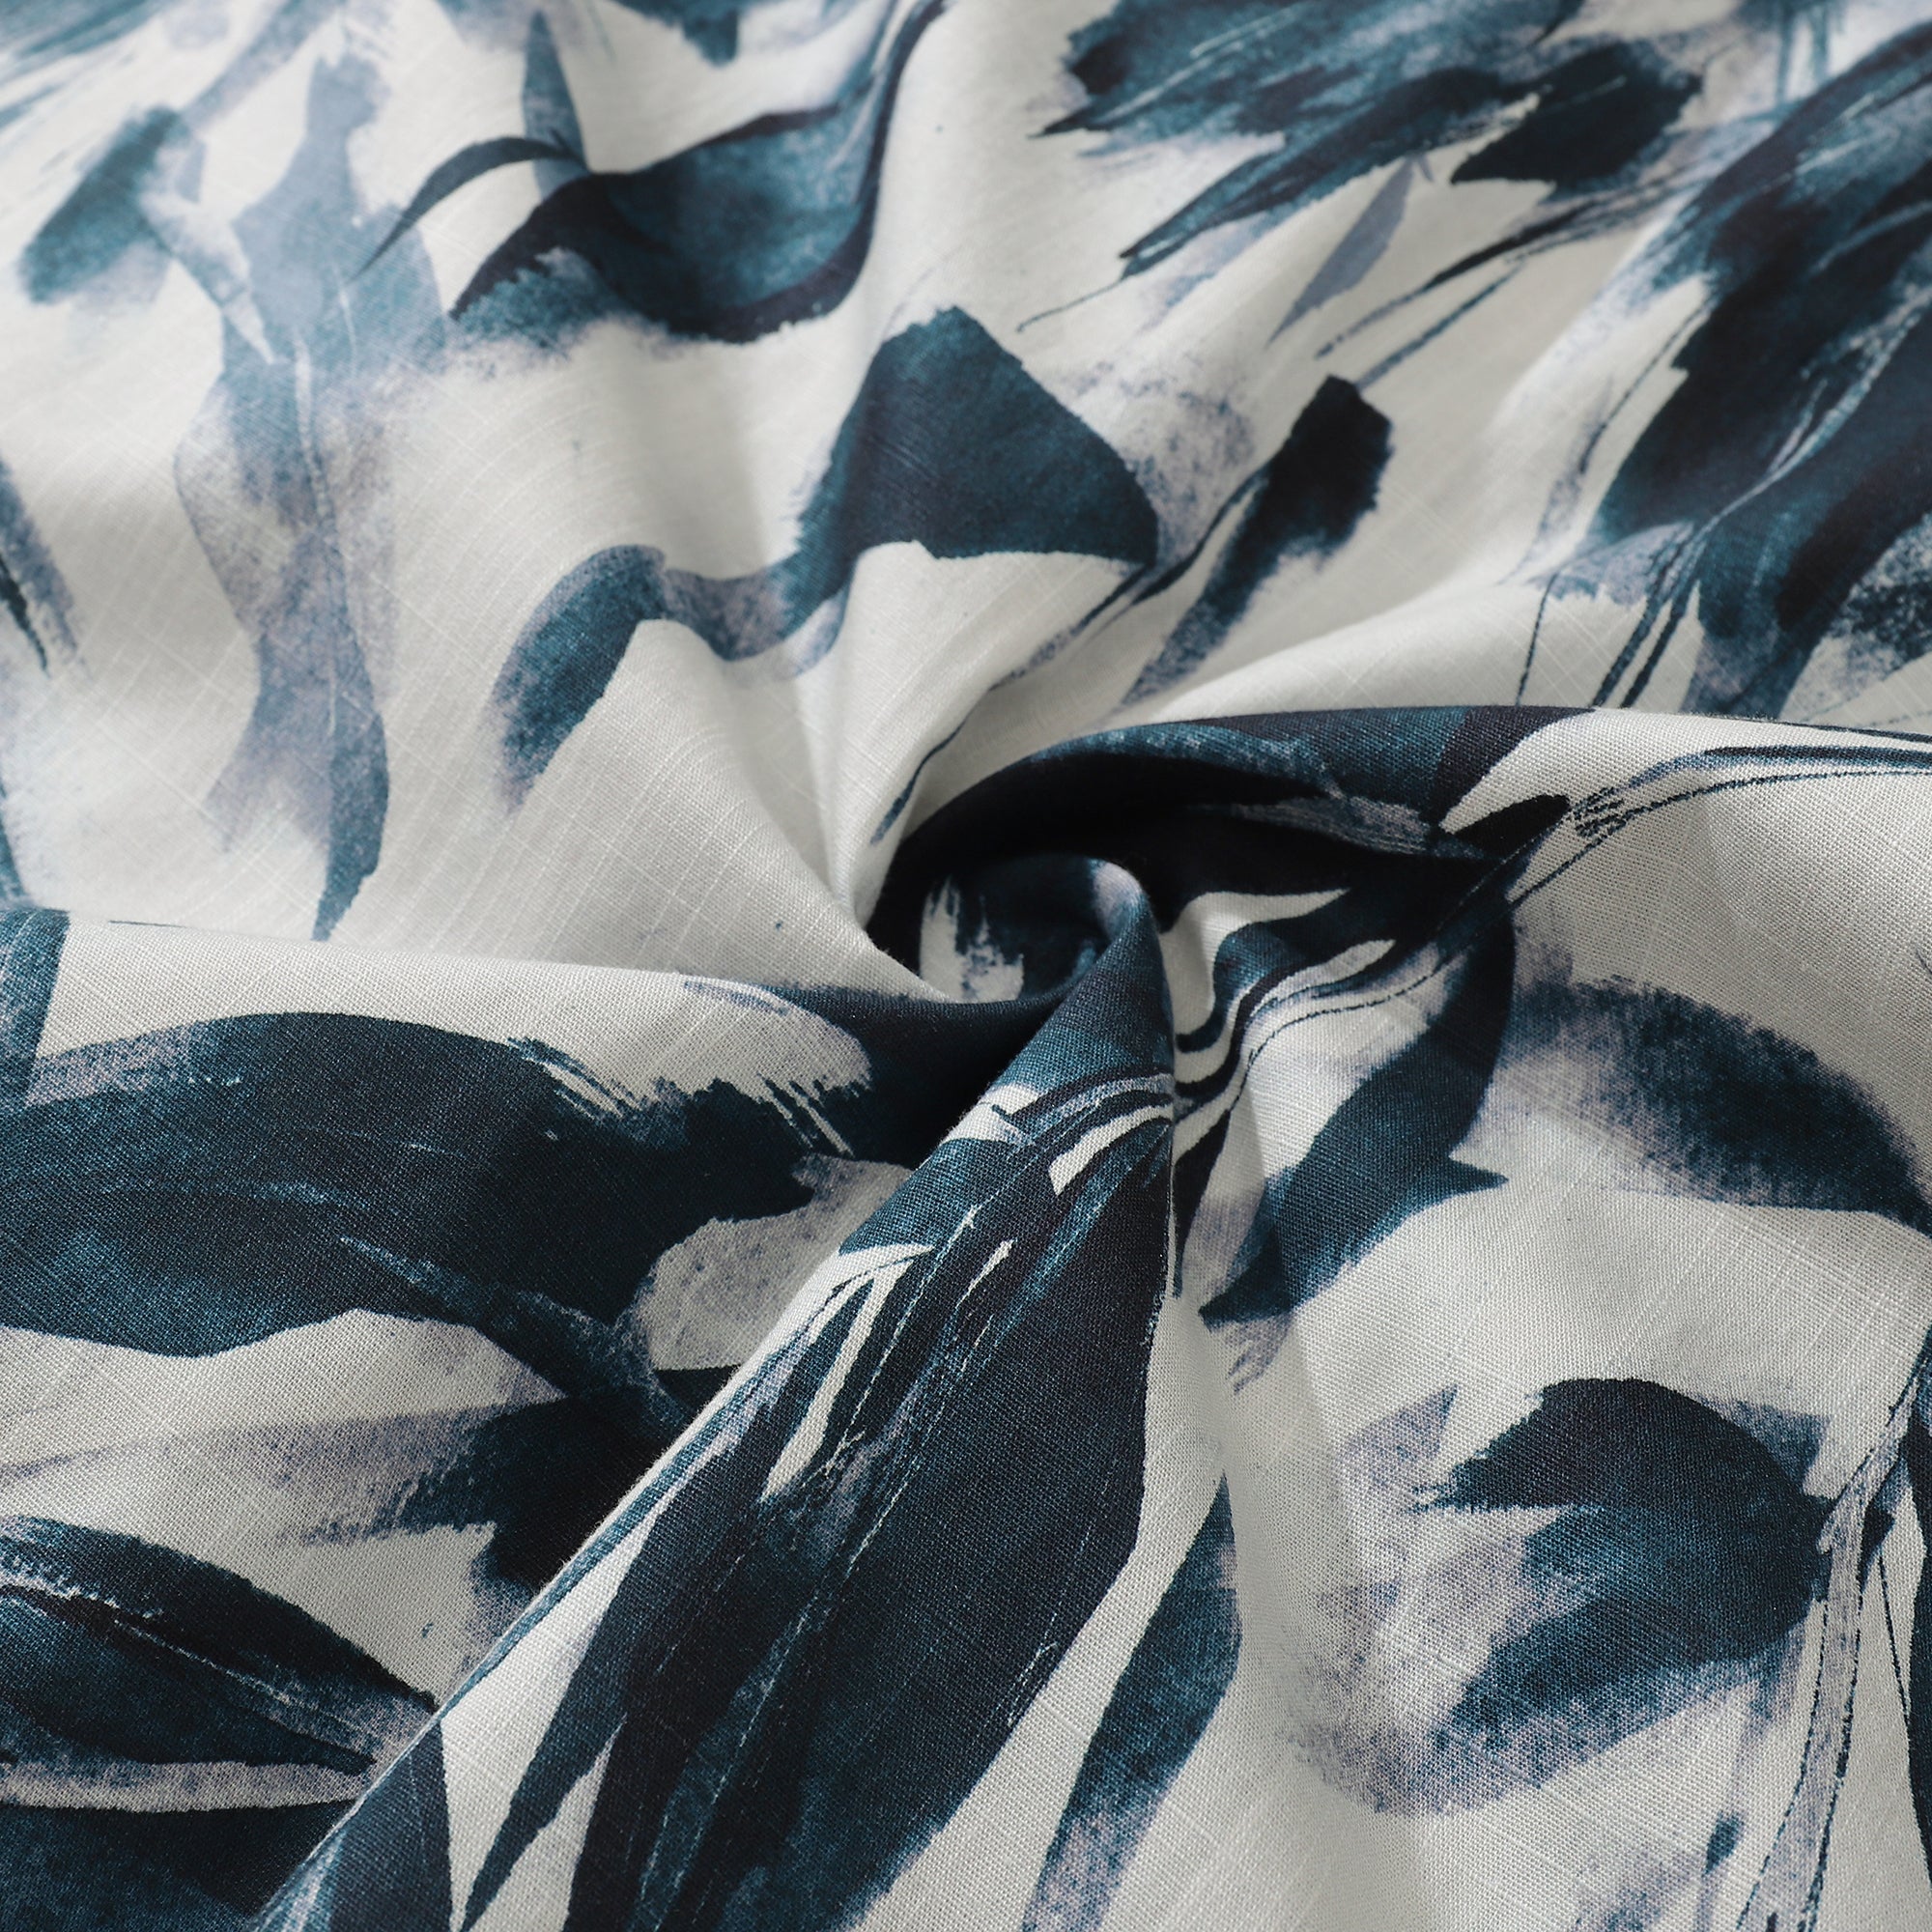 Men's Aloha Shirt Ink Painting Bamboo Leaves Cotton Short-sleeve Camp Shirt